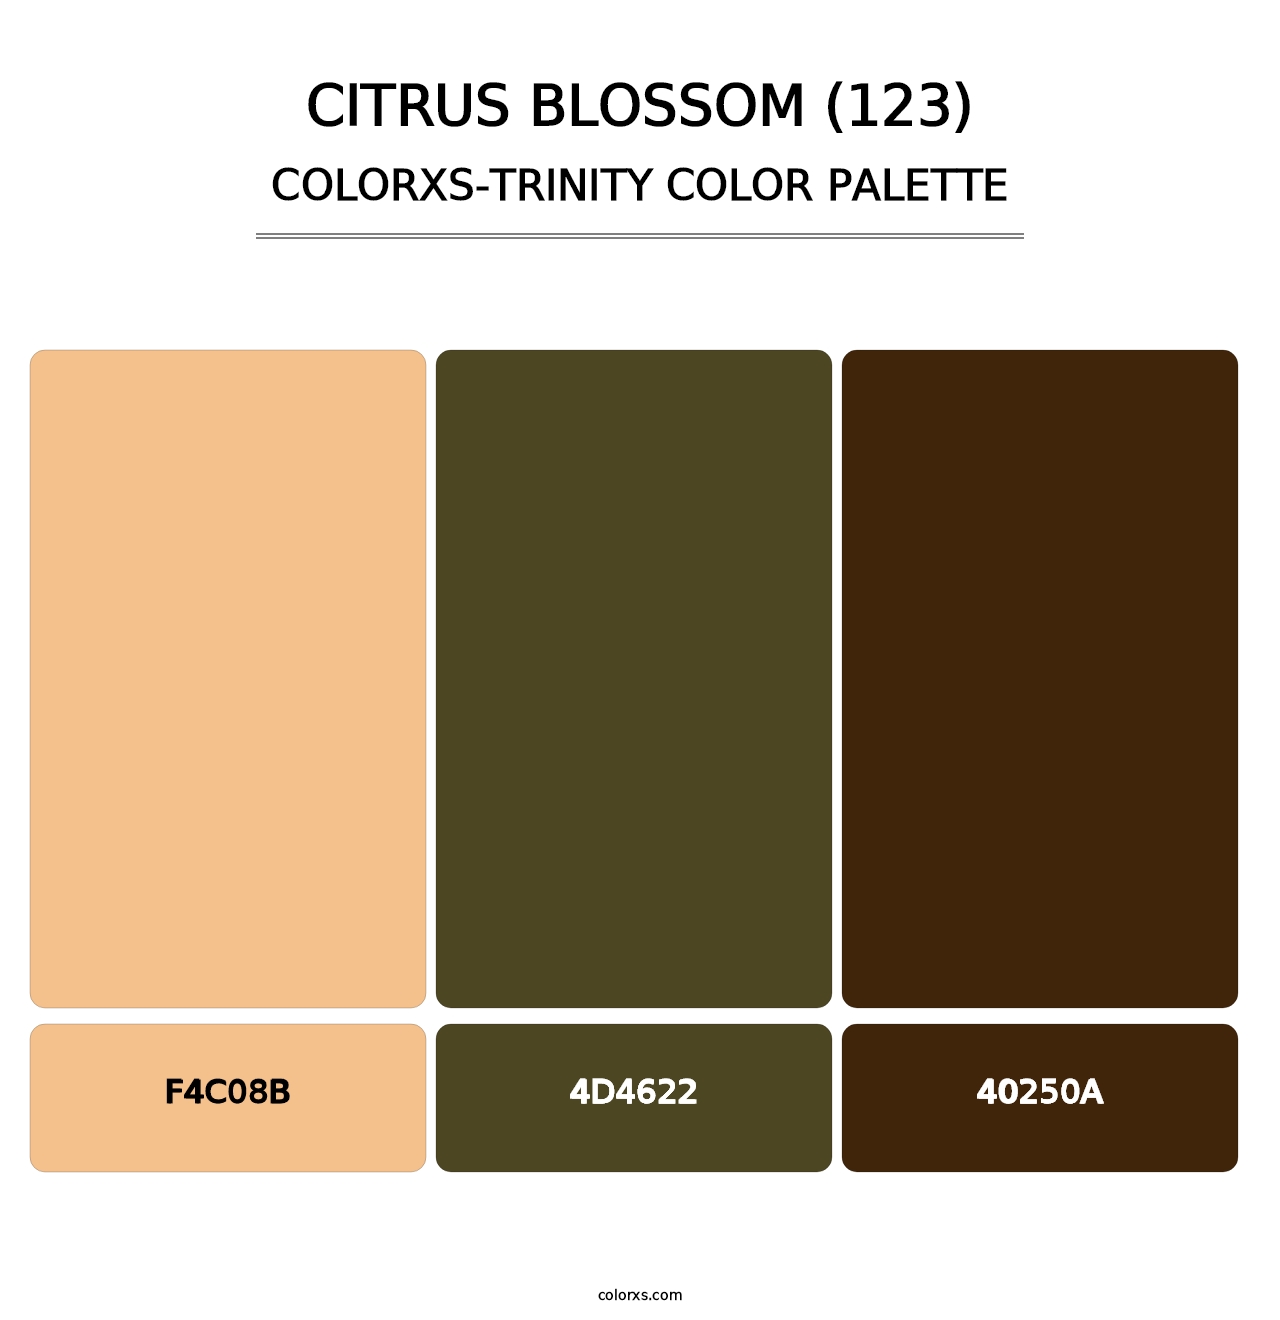 Citrus Blossom (123) - Colorxs Trinity Palette